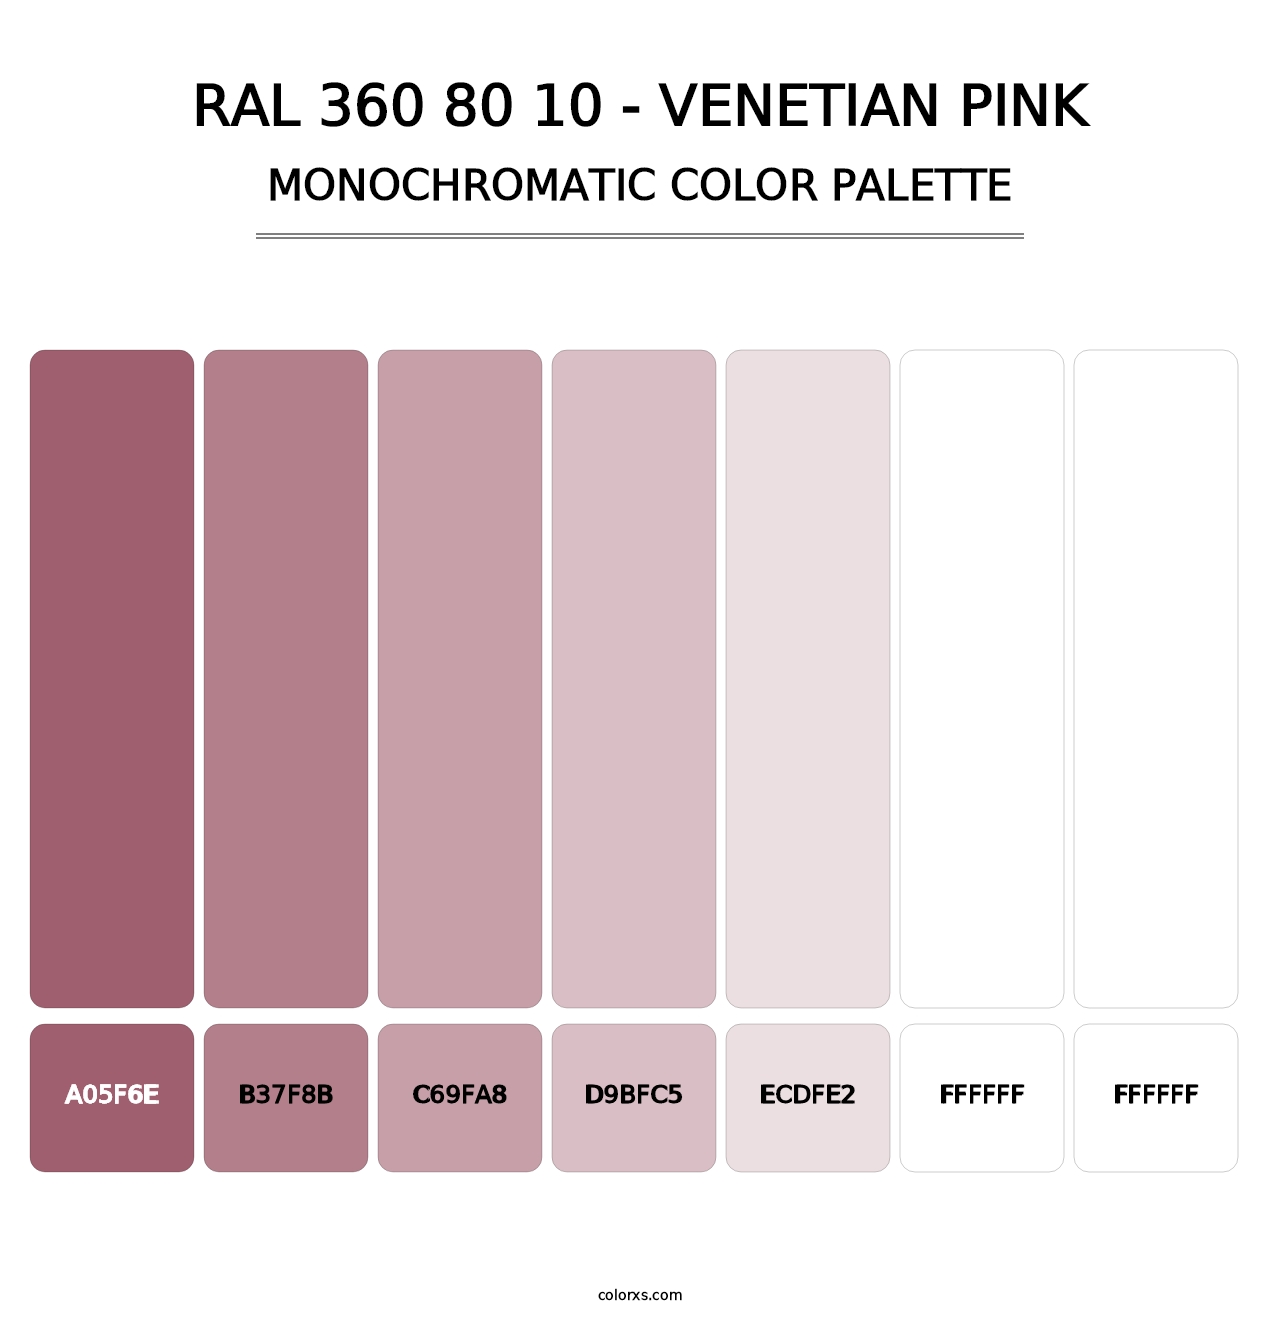 RAL 360 80 10 - Venetian Pink - Monochromatic Color Palette